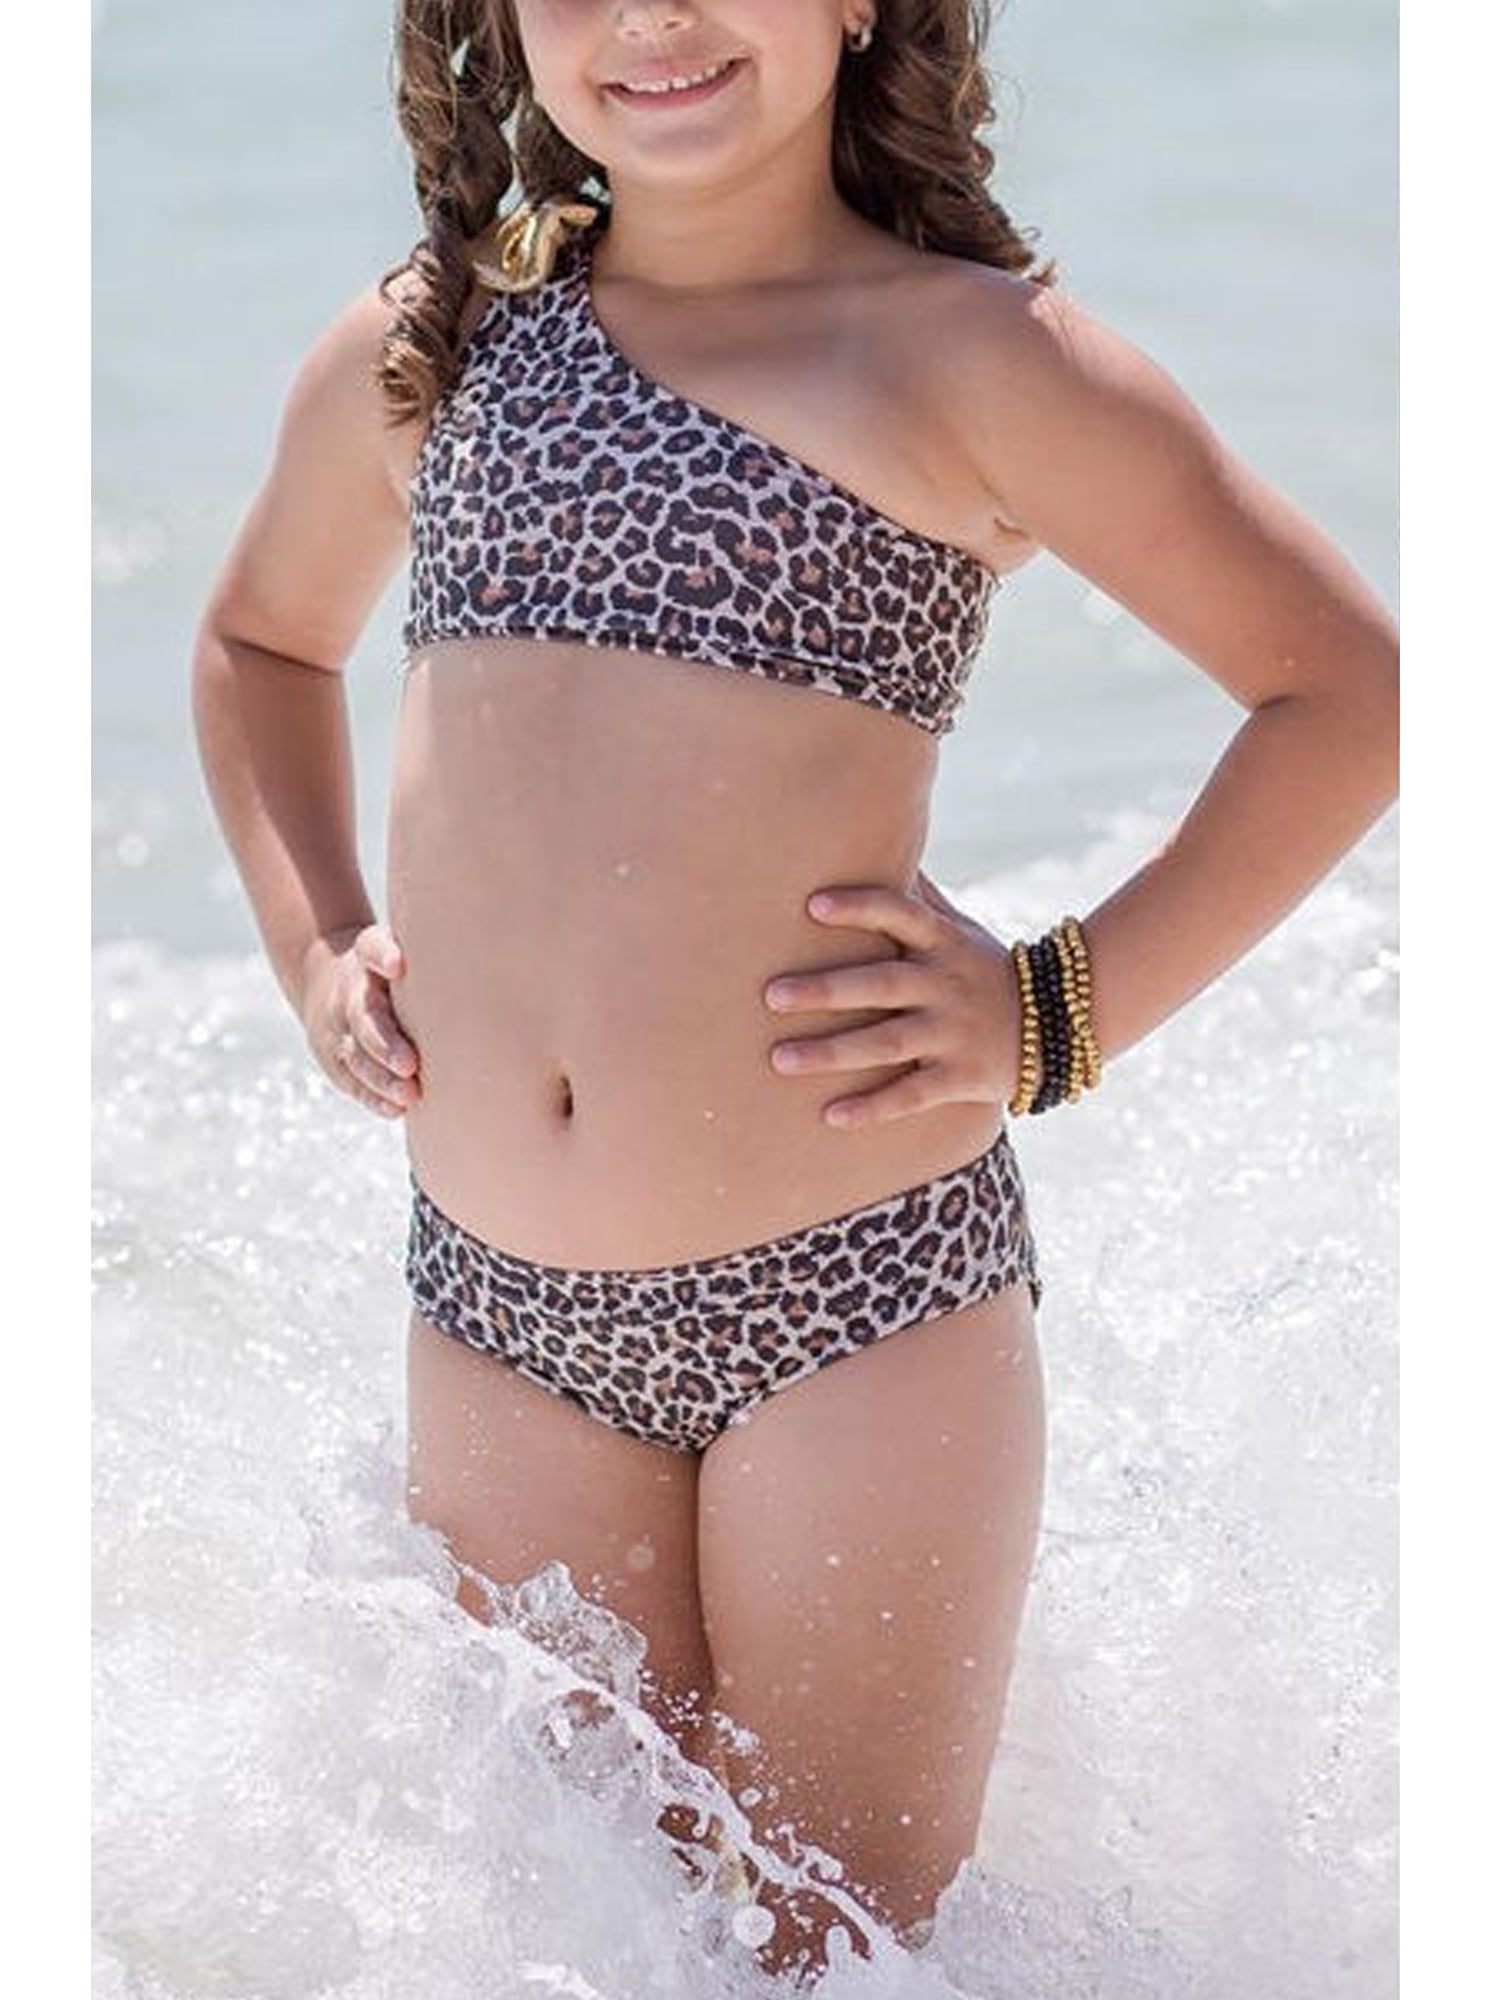 Baby Girl Sky Blue Rosettes Bikini Swimwear Swimsuit Tutu 3PC set For Size 2-7Y 